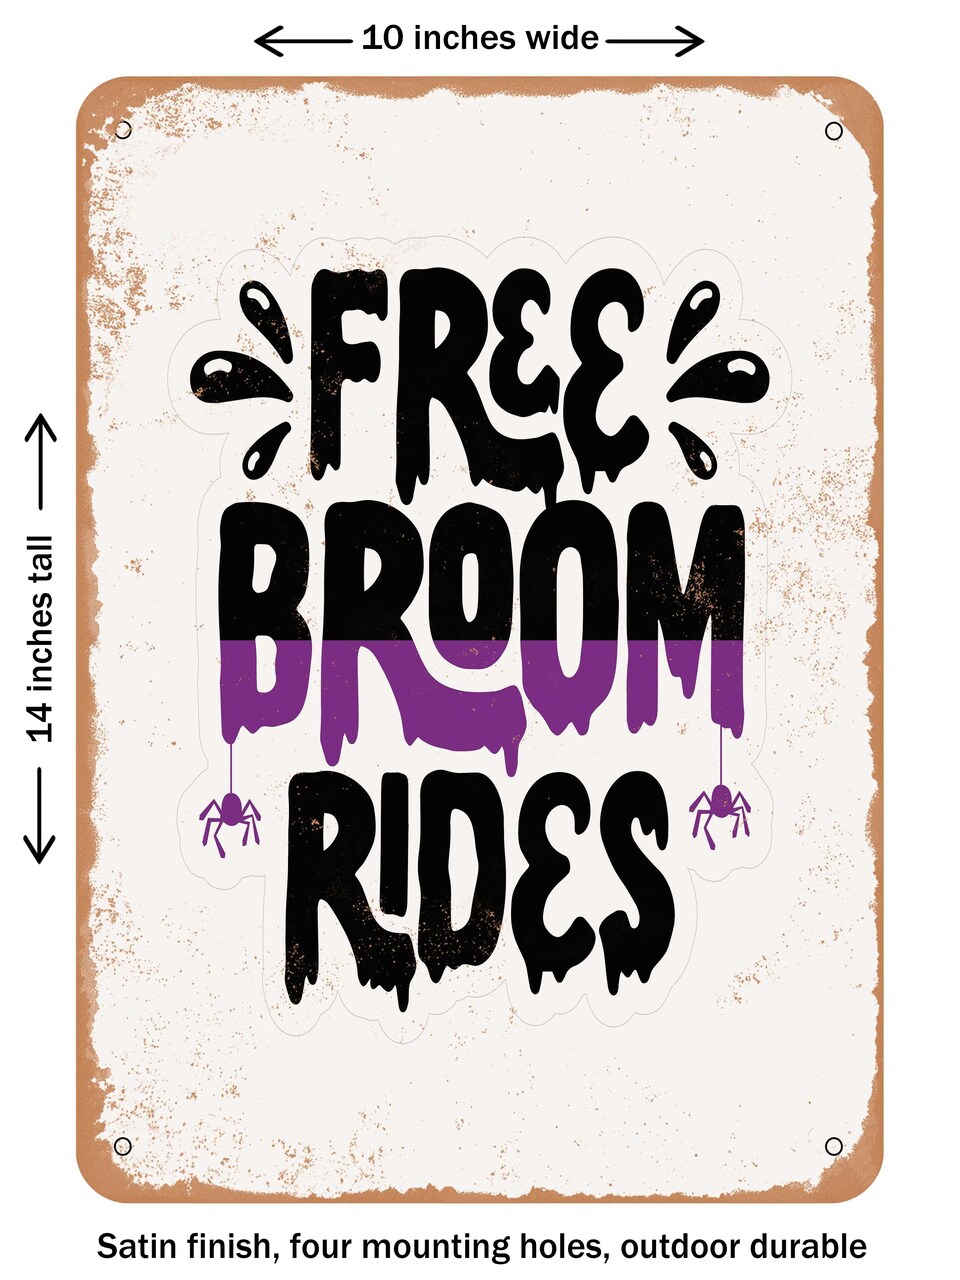 DECORATIVE METAL SIGN - Free Broom Rides - 6  - Vintage Rusty Look